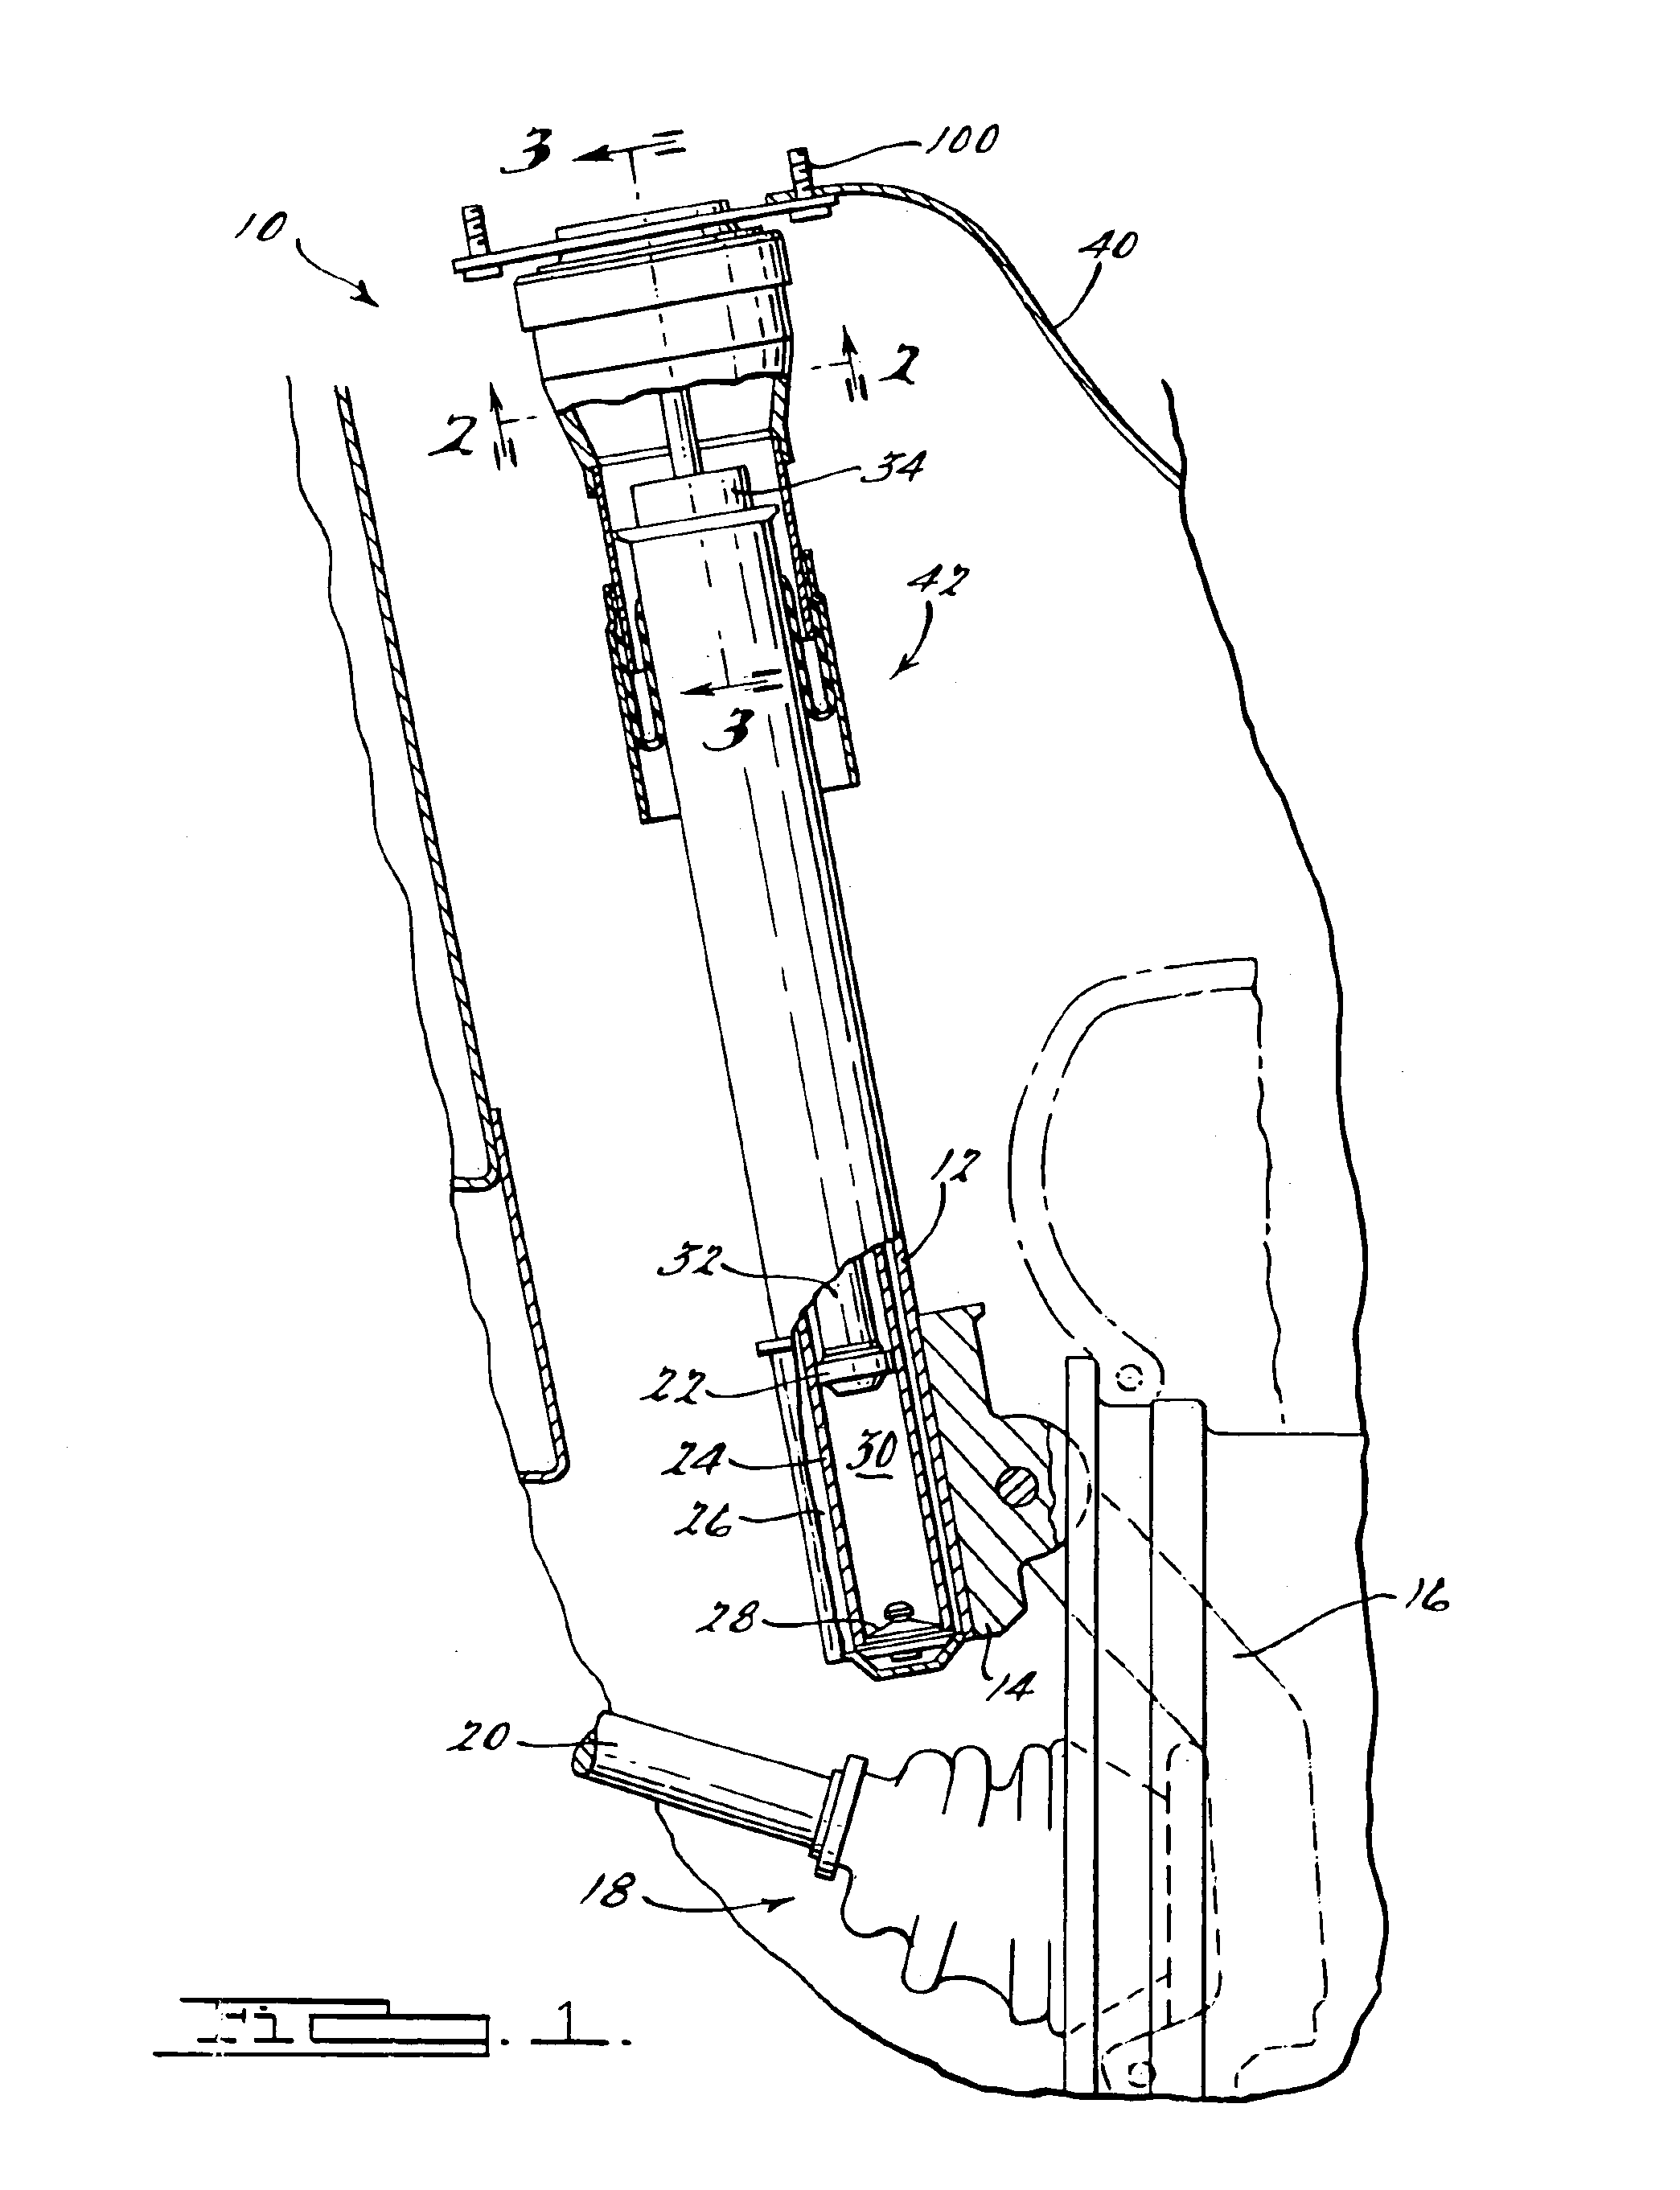 Upper shock mount isolator with integral air spring housing pivot bearing